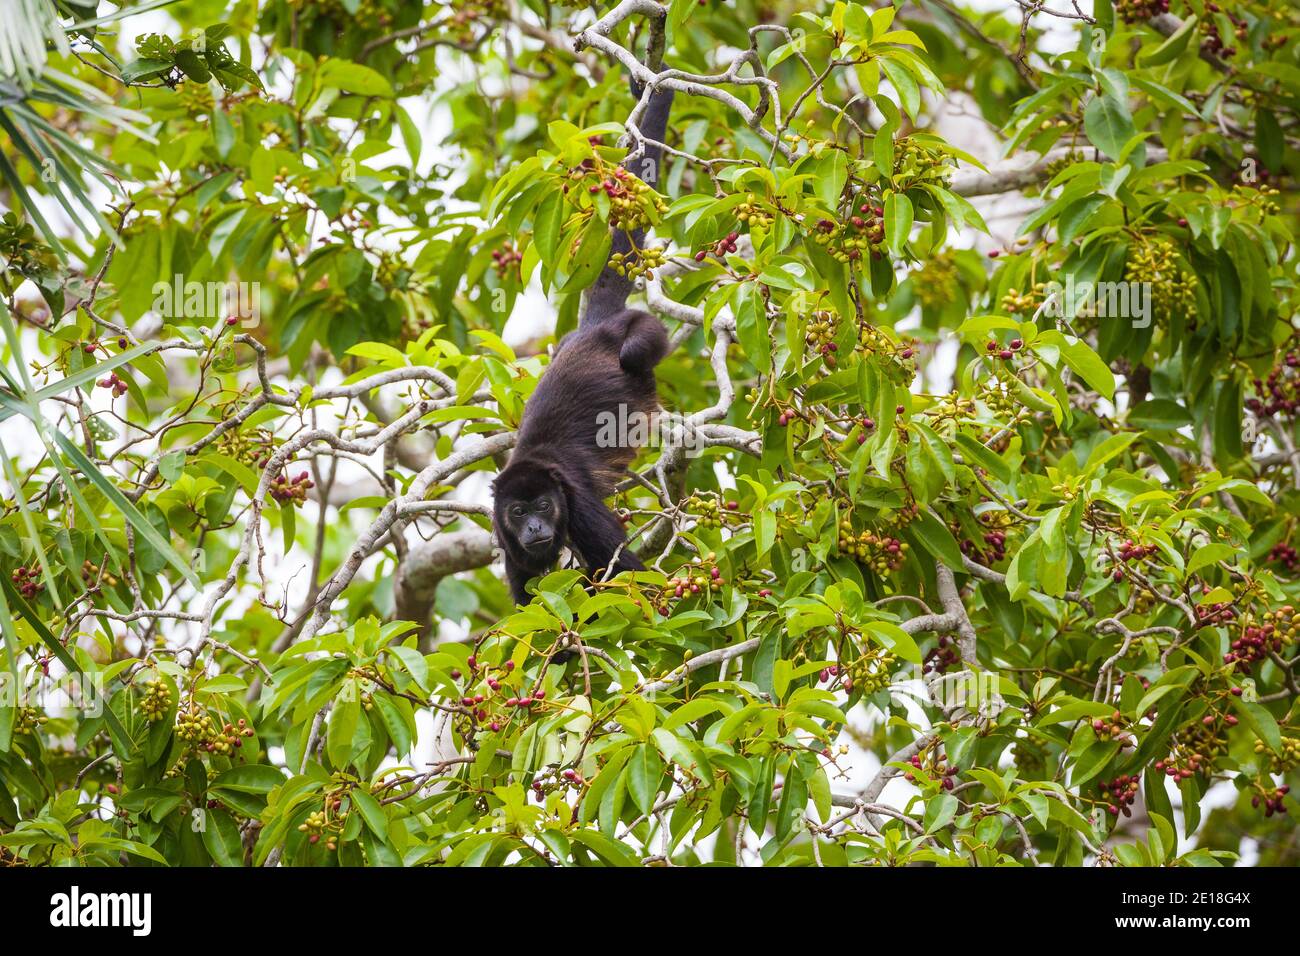 Panama wildlife with a Mantled Howler Monkey, Alouatta palliata, inside the rainforest of Soberania national park, Republic of Panama. Stock Photo